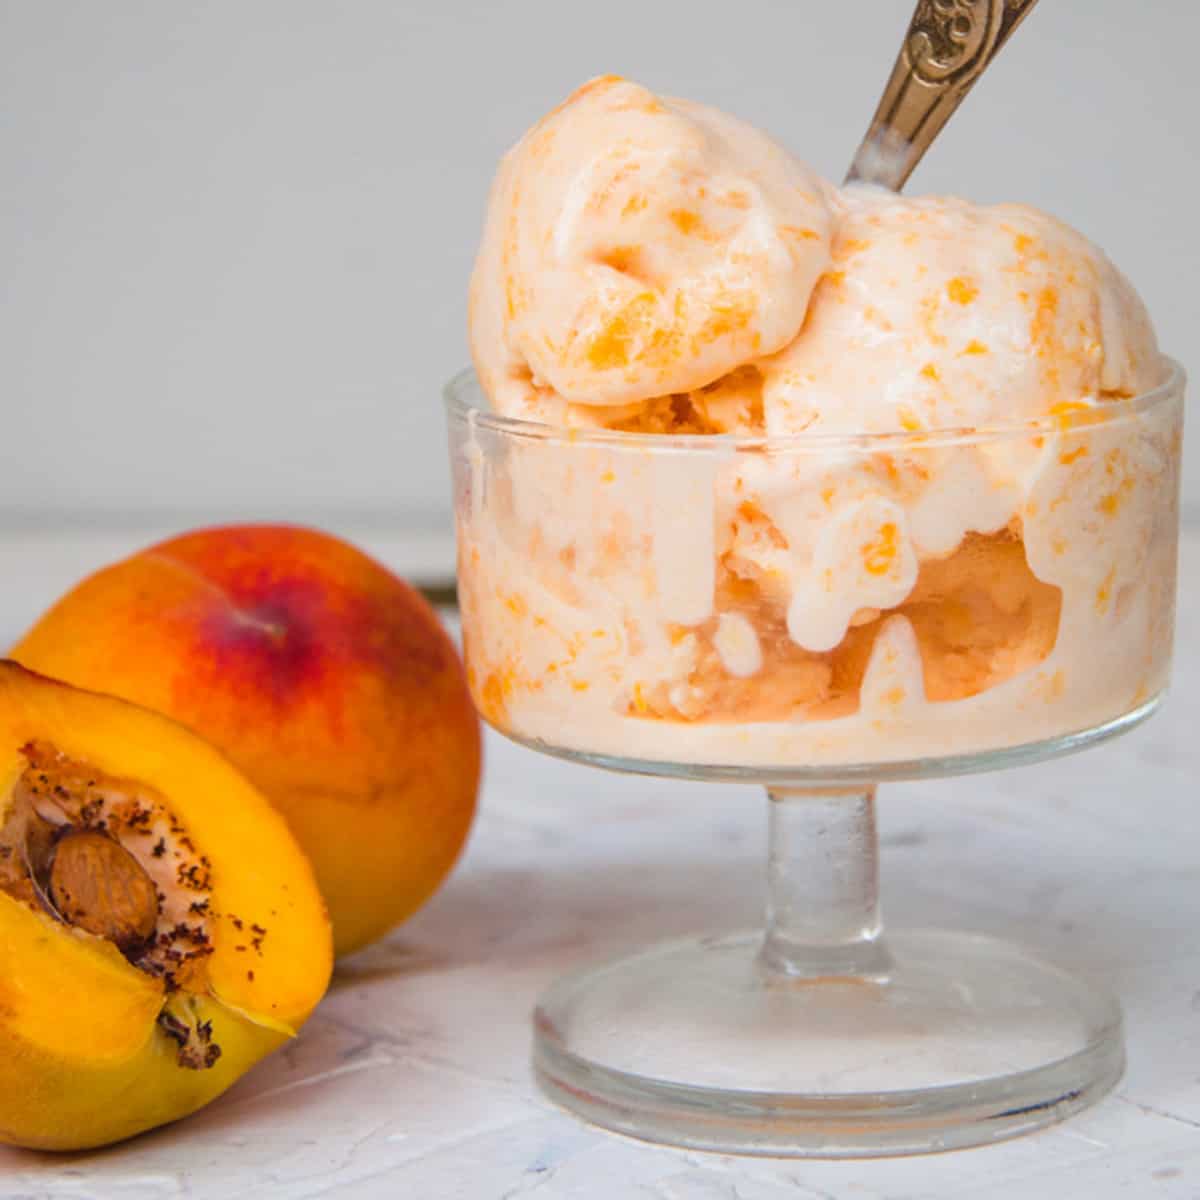 https://recipe52.com/wp-content/uploads/2021/05/peach-ice-cream-cover-1.jpg